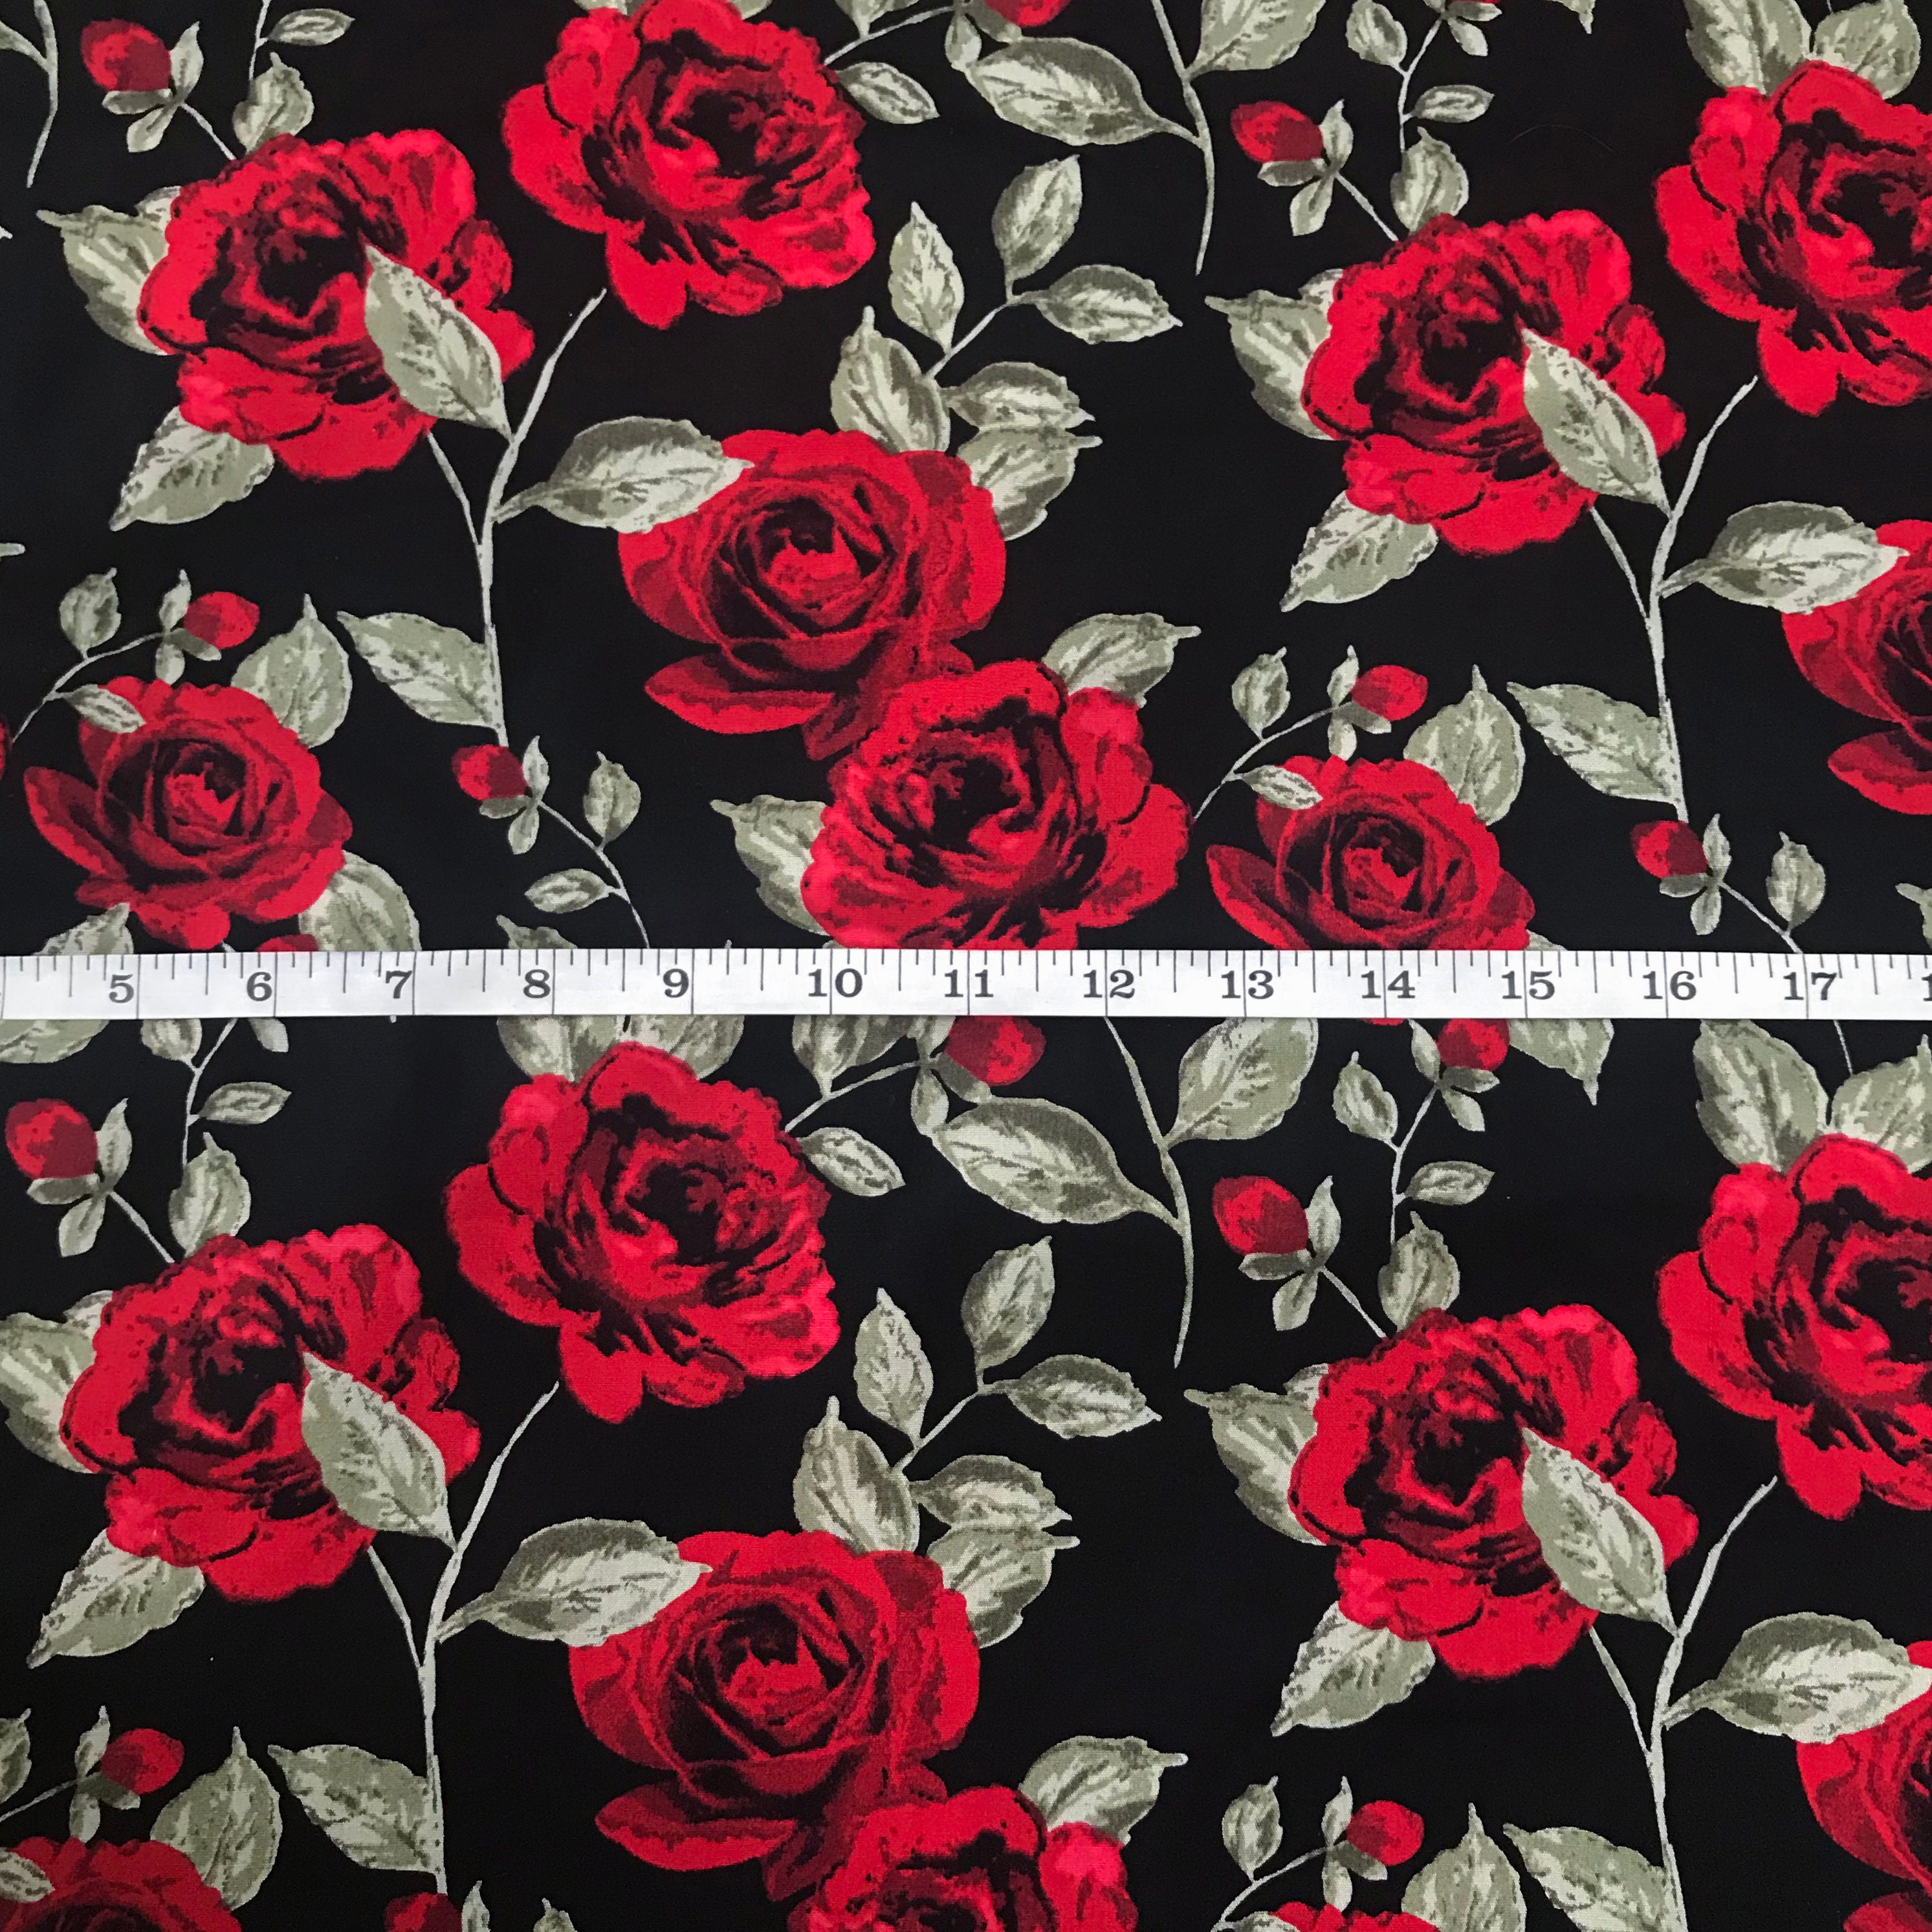 Fabric the Black Rose Garden Red Rose Print / | Etsy